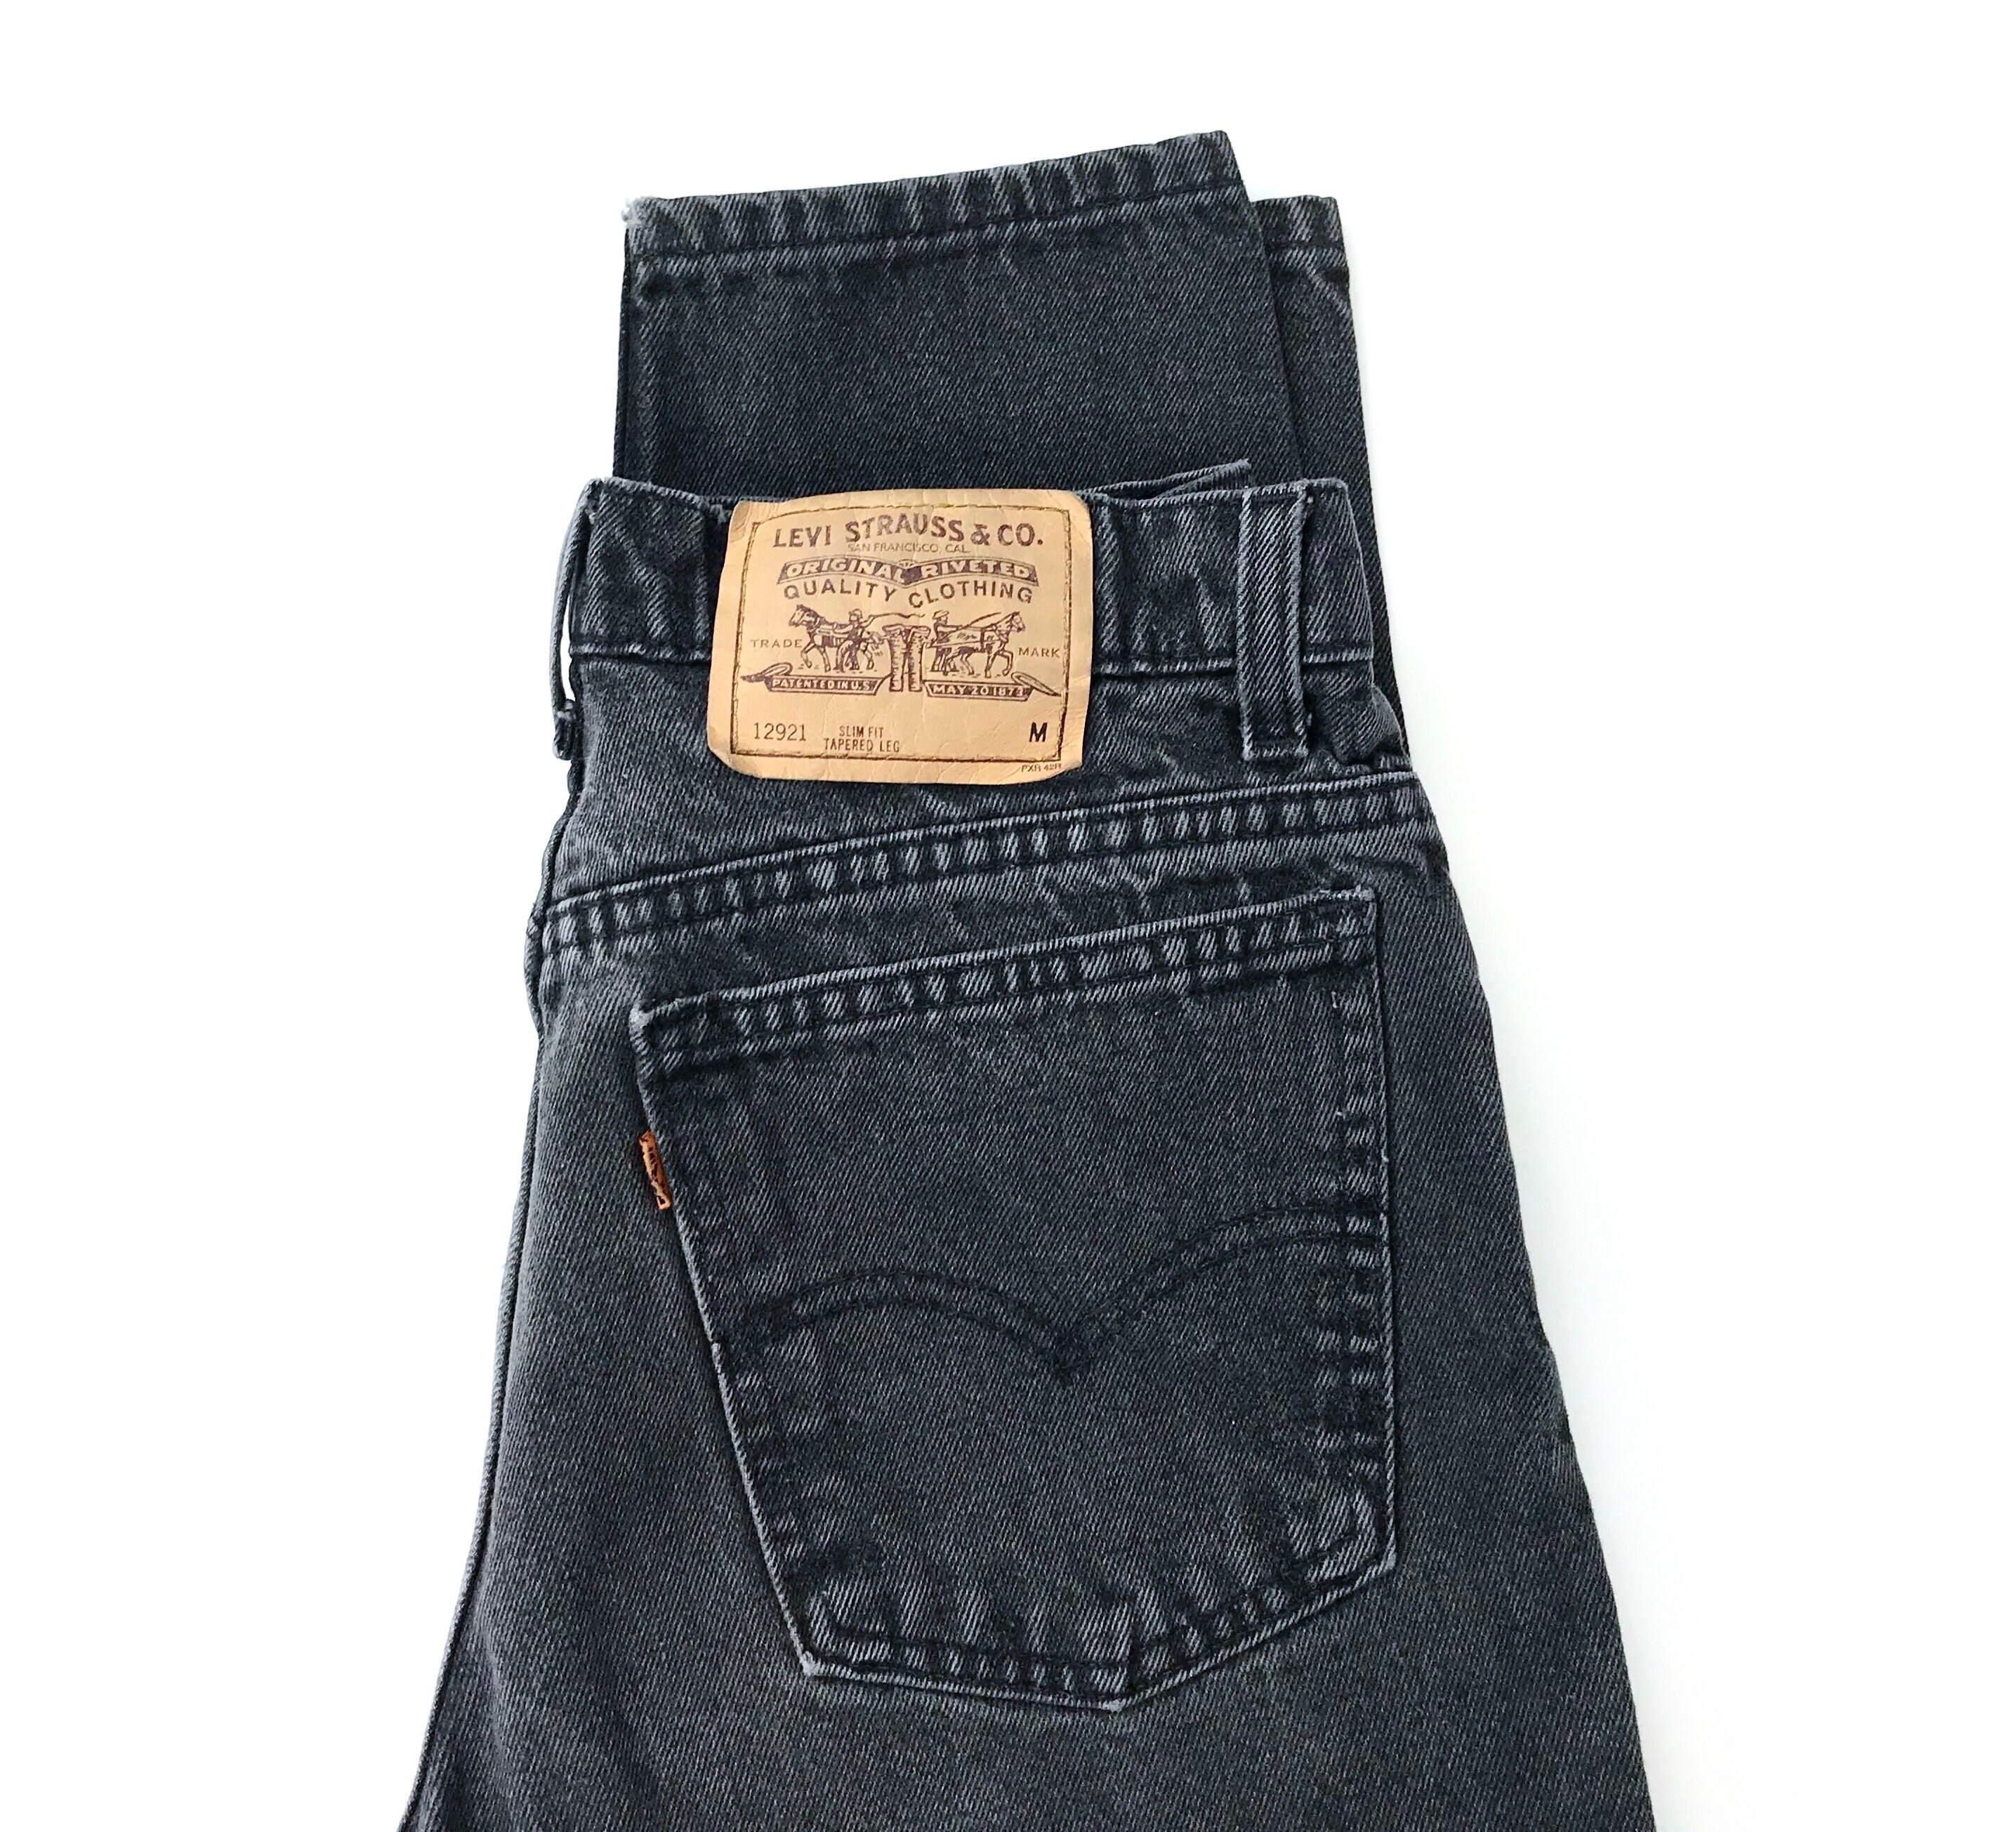 Levi's 921 Orange Tab Jeans / Size 27